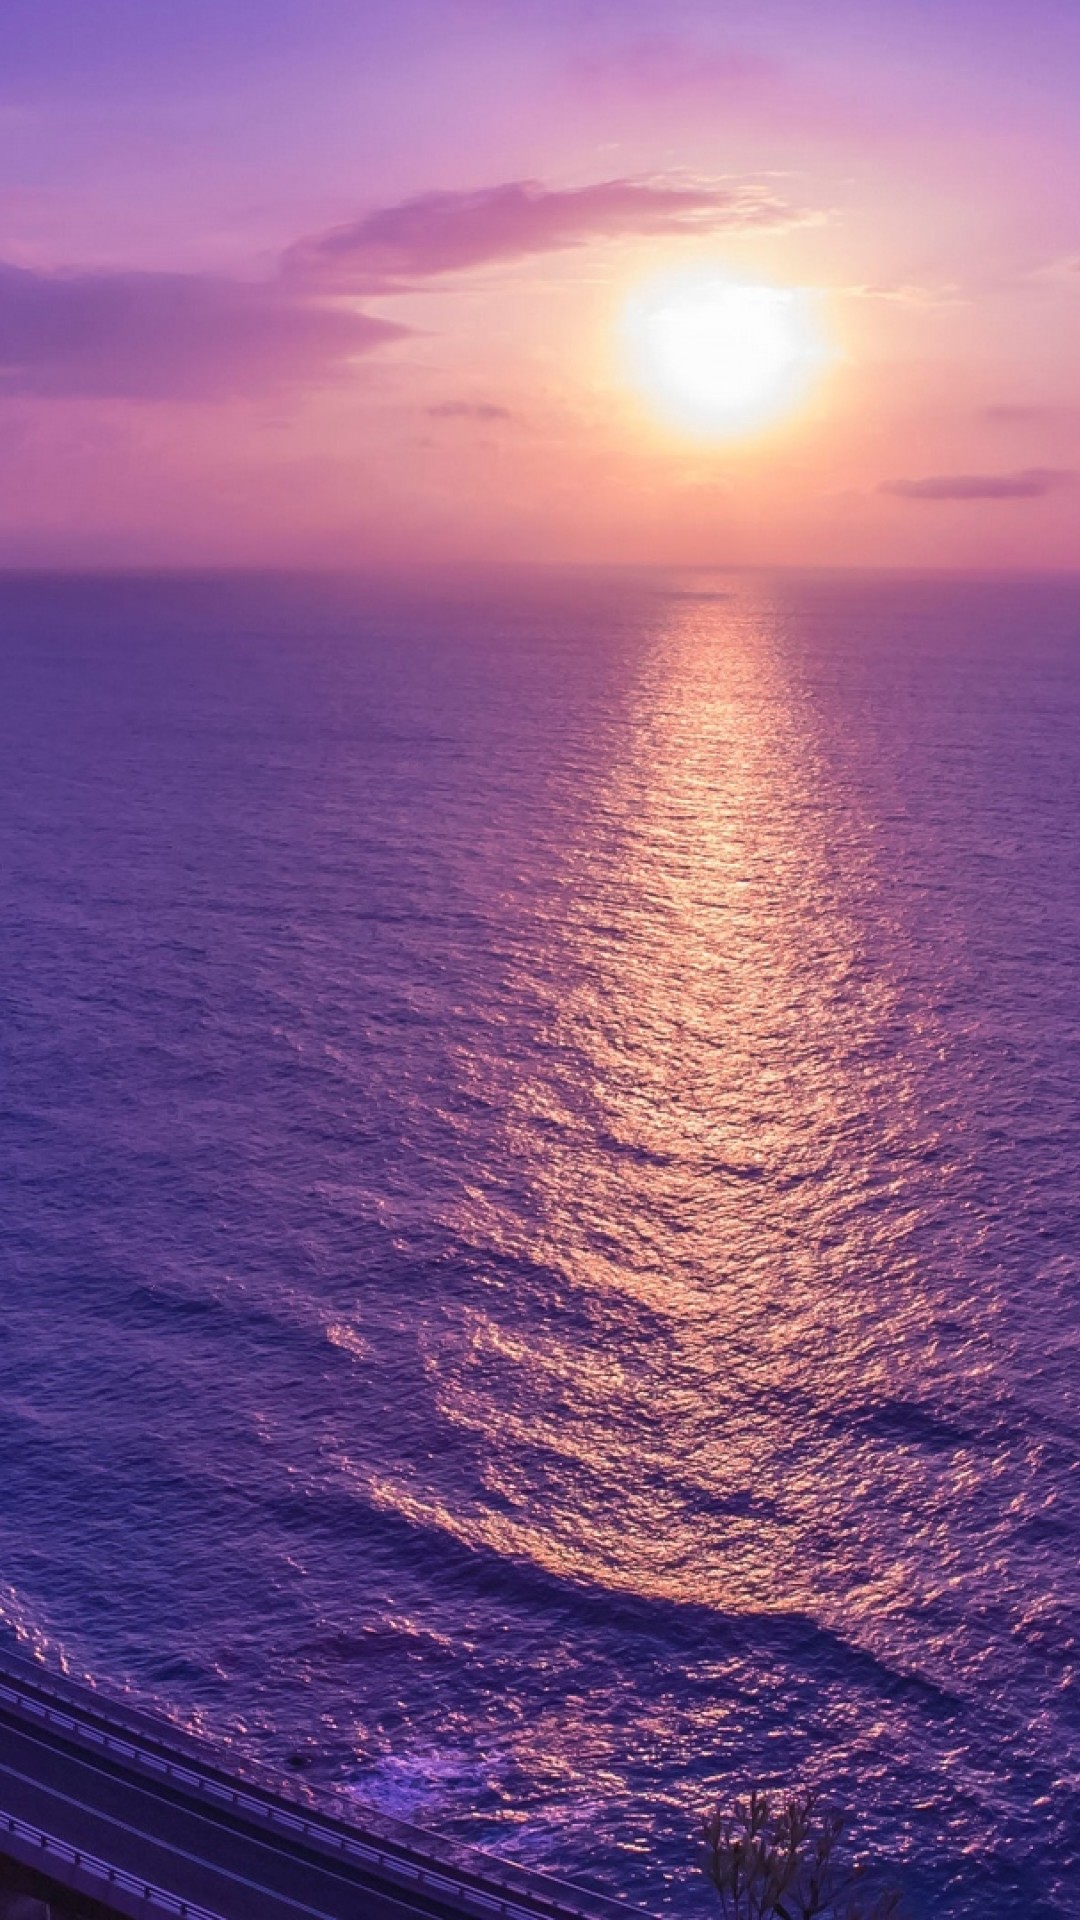 Lilac sea sunset HD Wallpaper iPhone 6 / 6S Plus Wallpaper .net